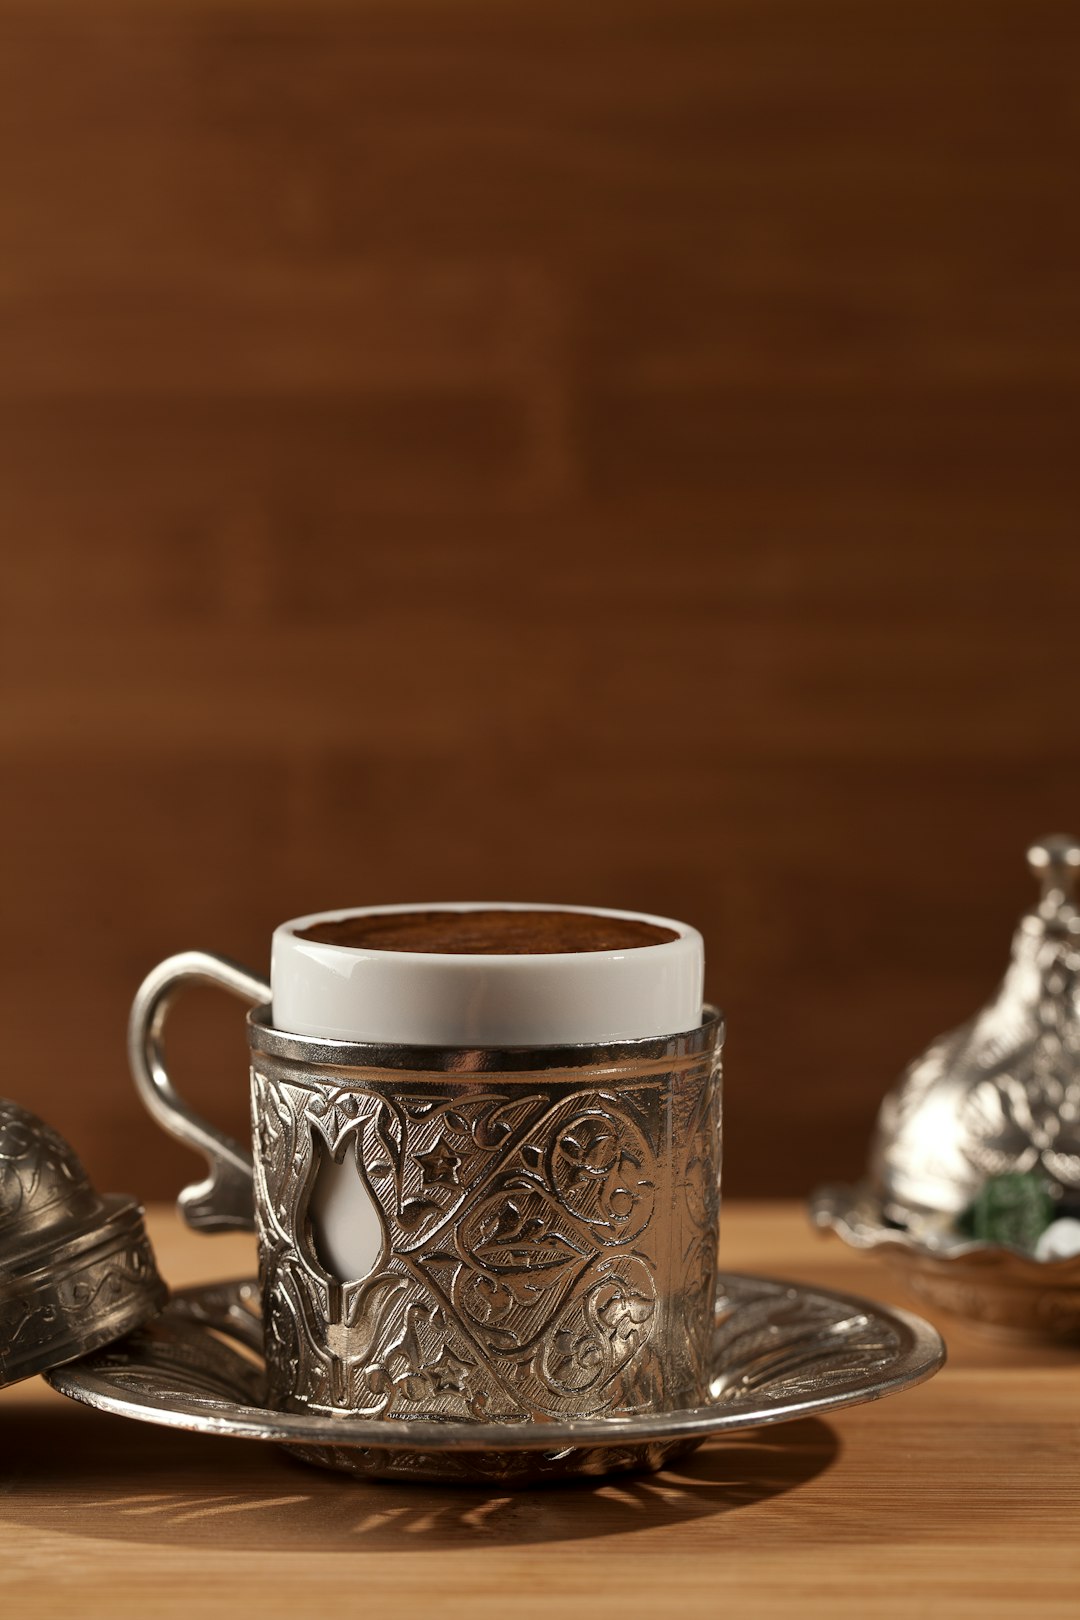 white and black floral ceramic mug on table